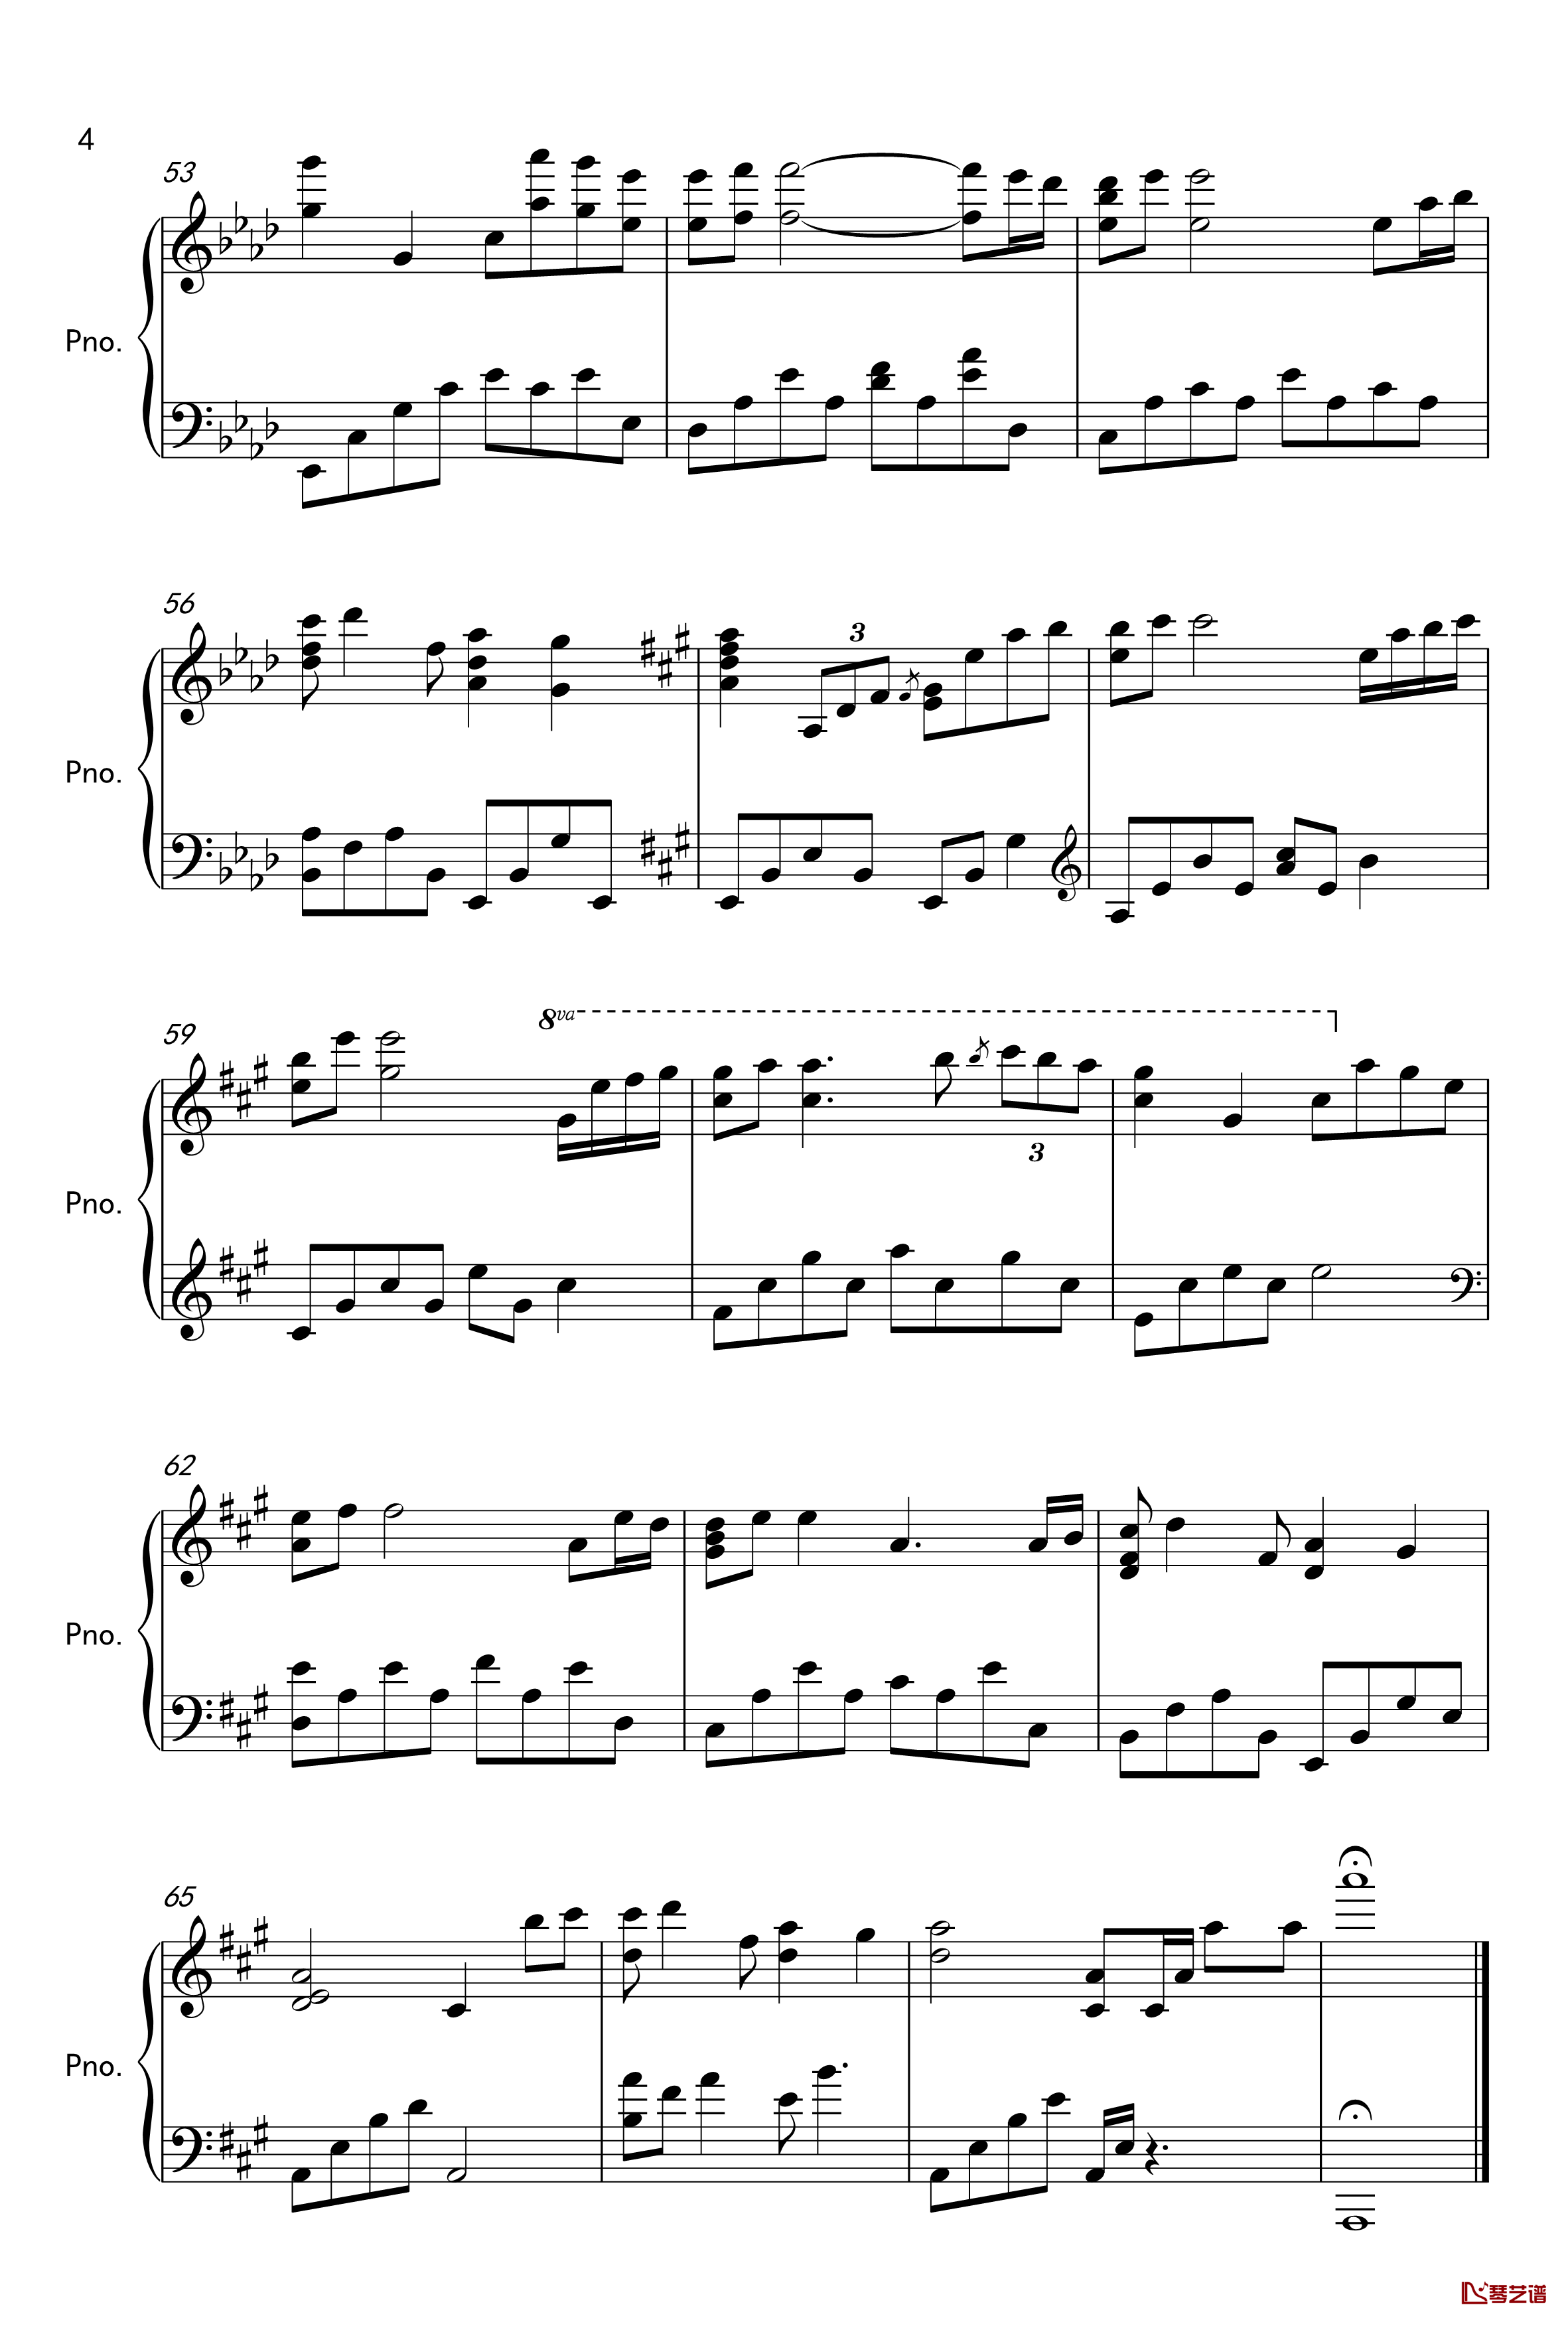 kiss the rain原声版2钢琴谱-Yiruma